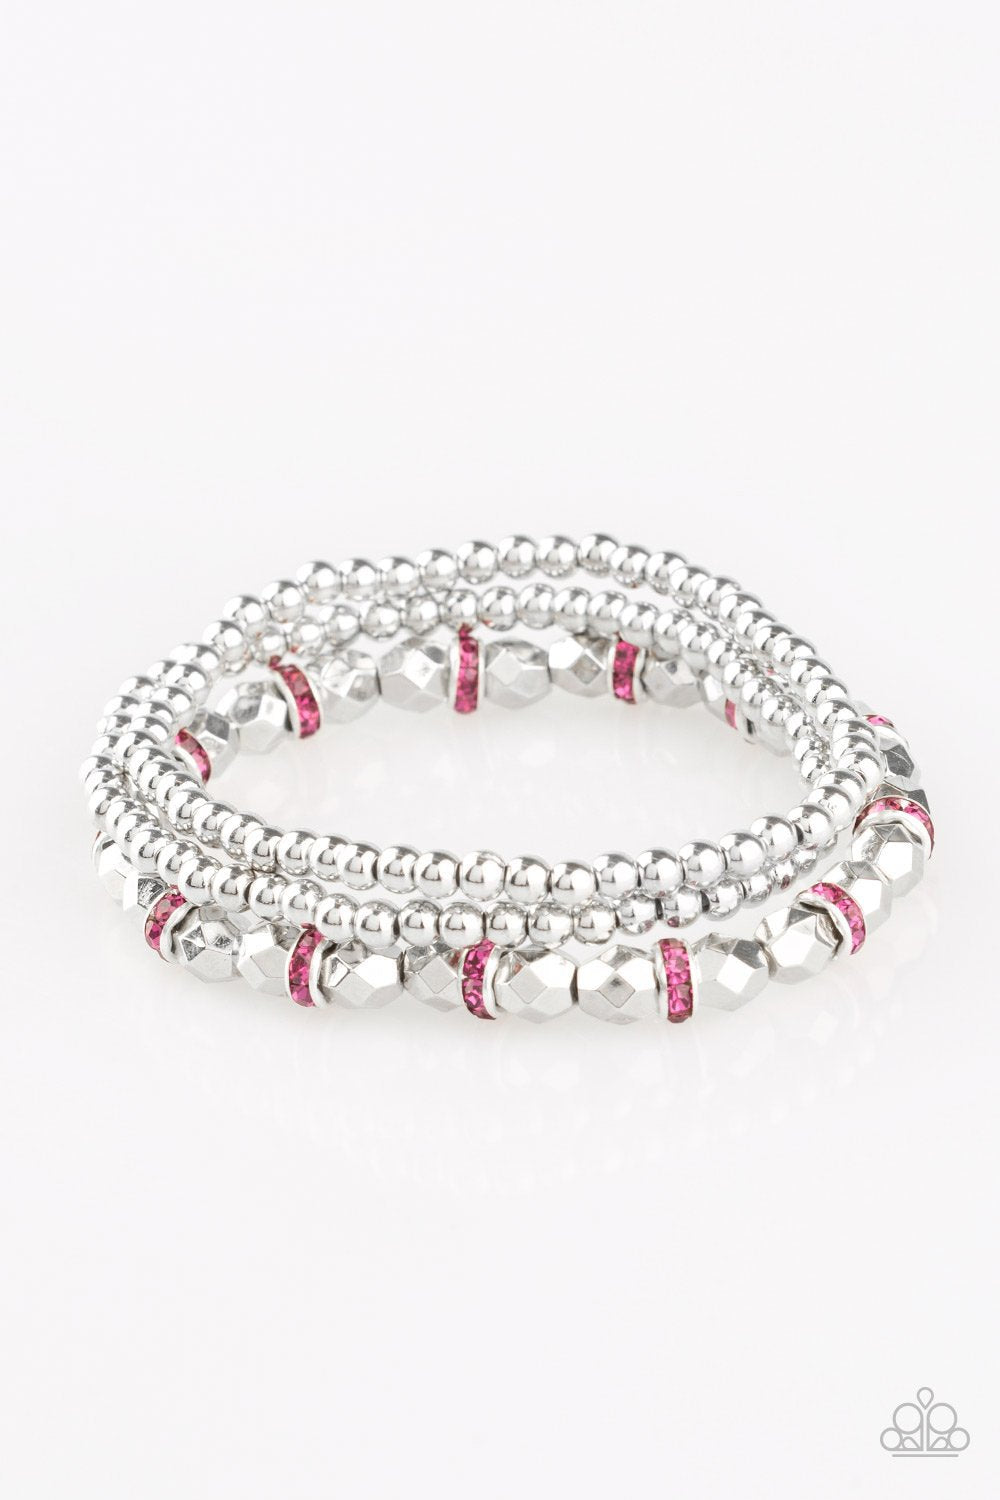 Let There BEAM Light - Pink Paparazzi Bracelet